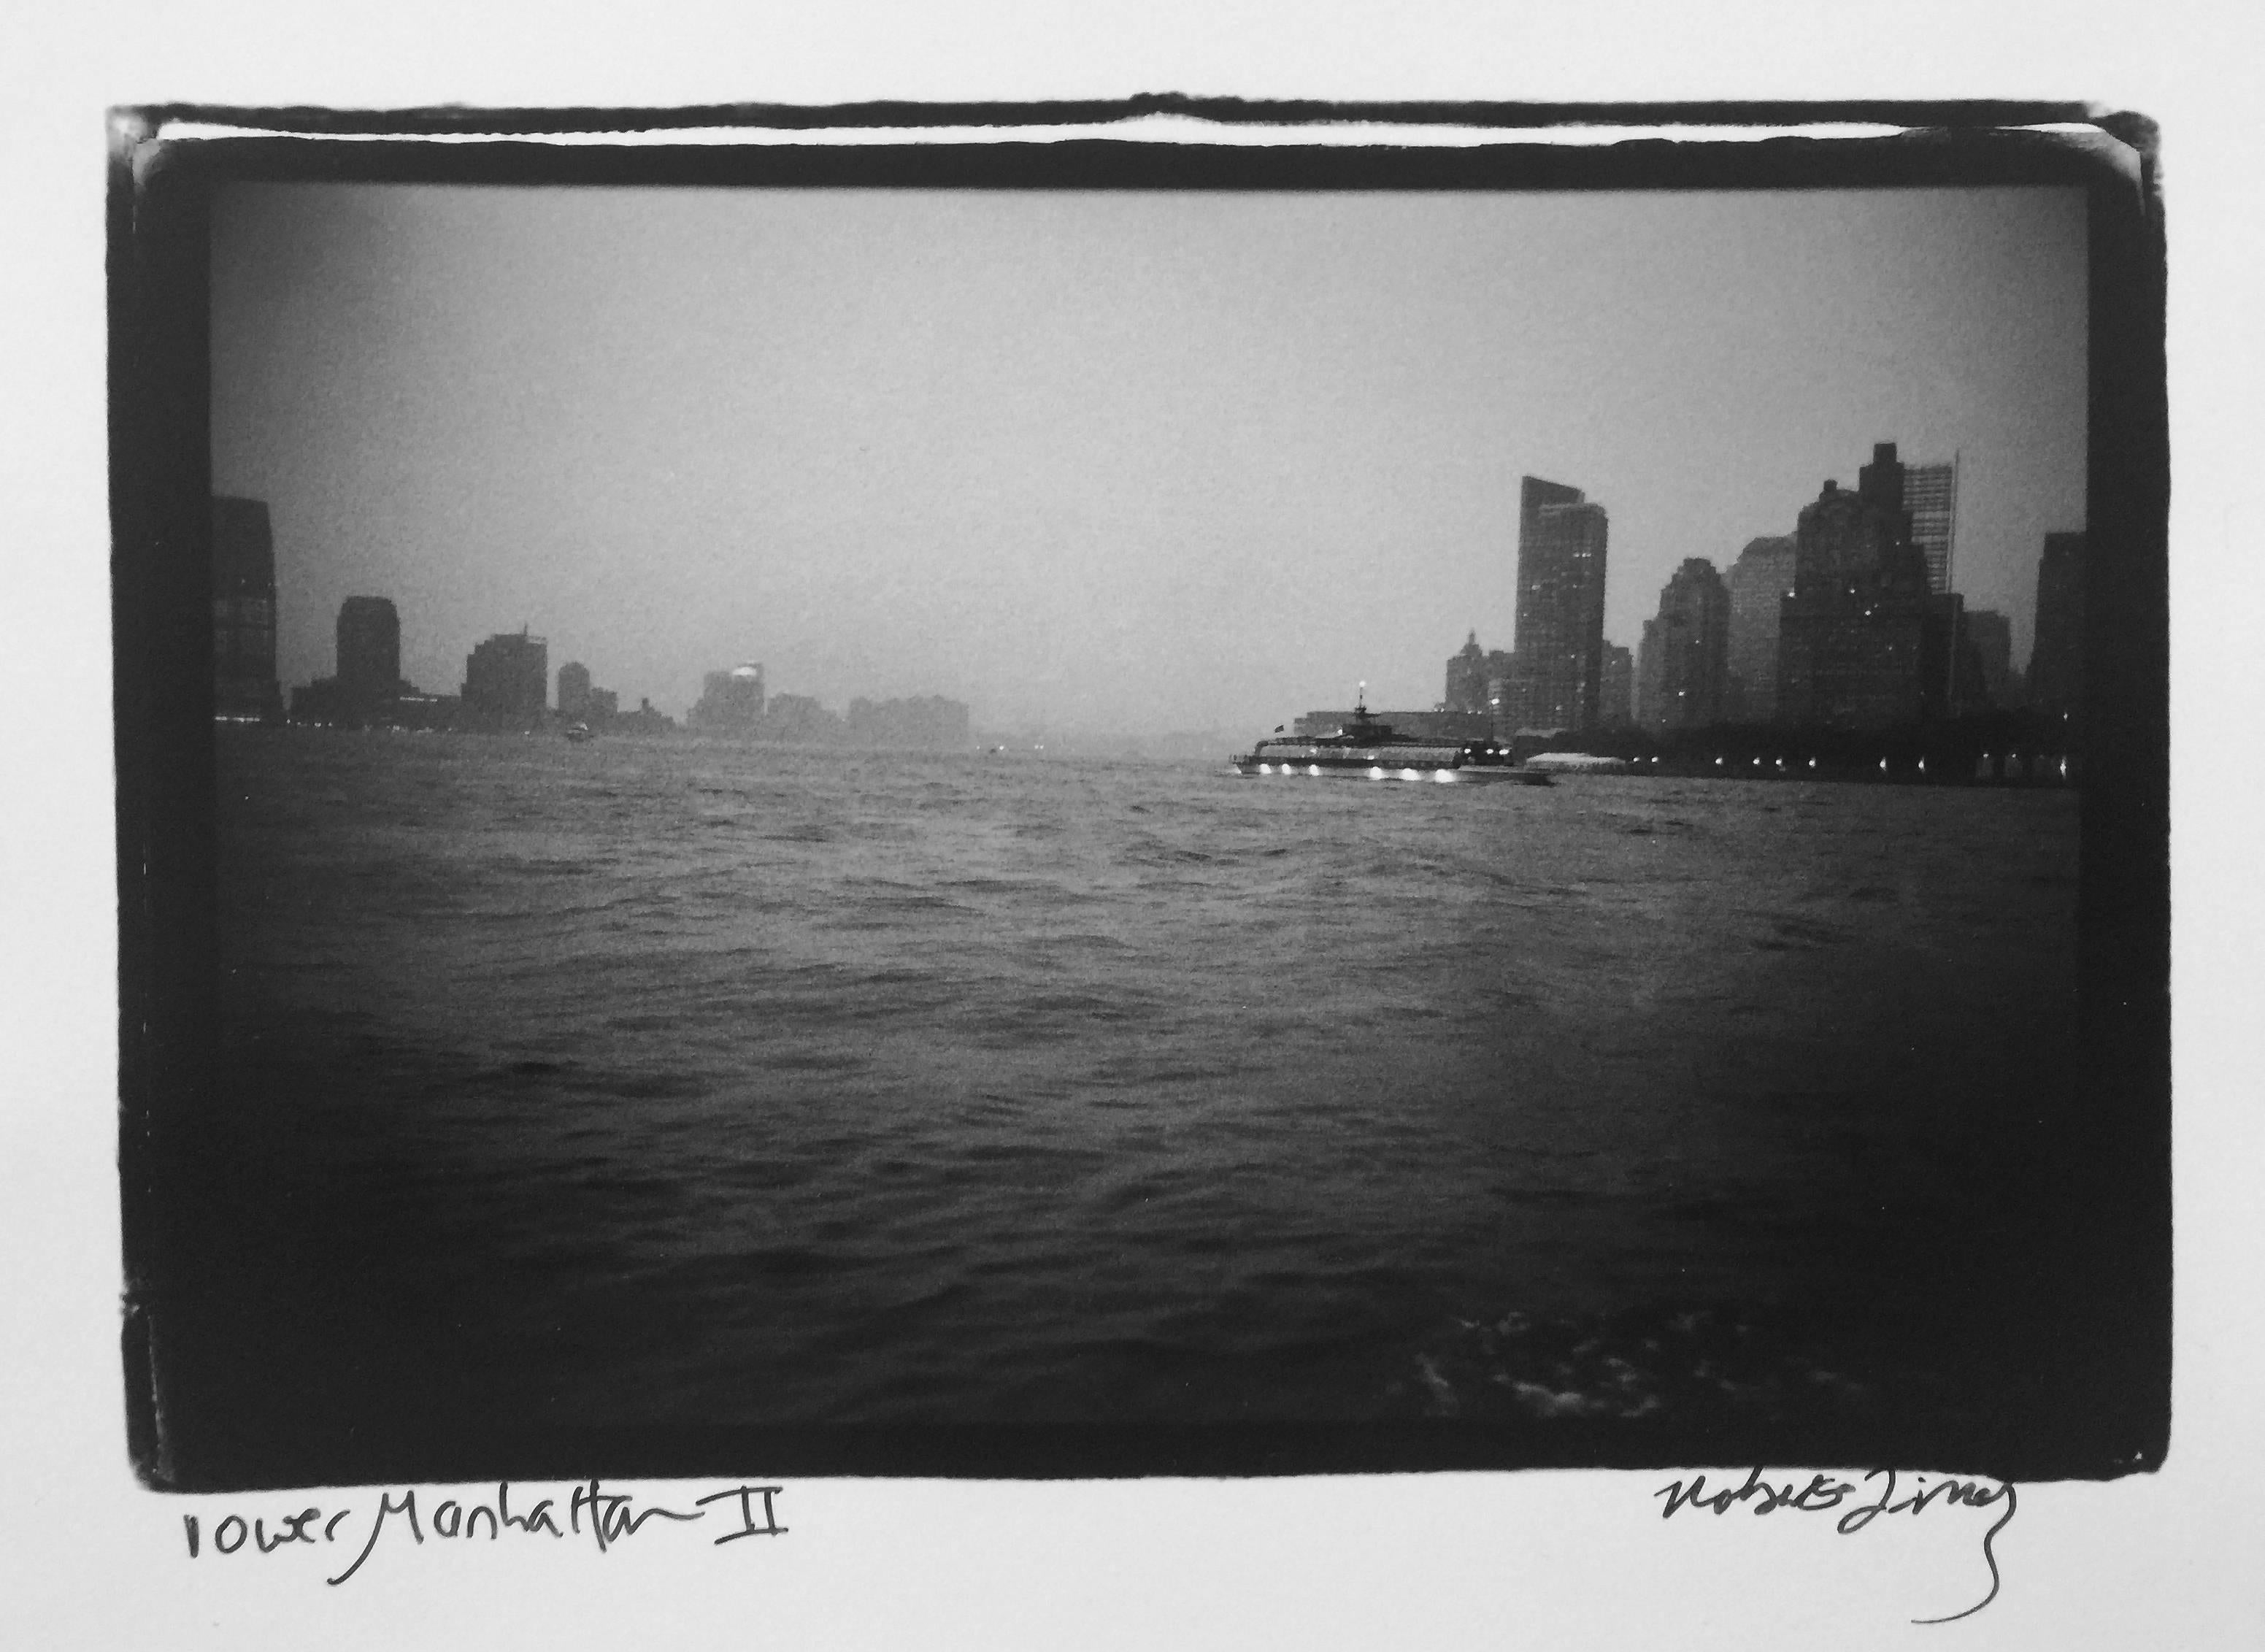 Lower Manhattan II, New York City, Waterfront Cityscape Urban Photography  